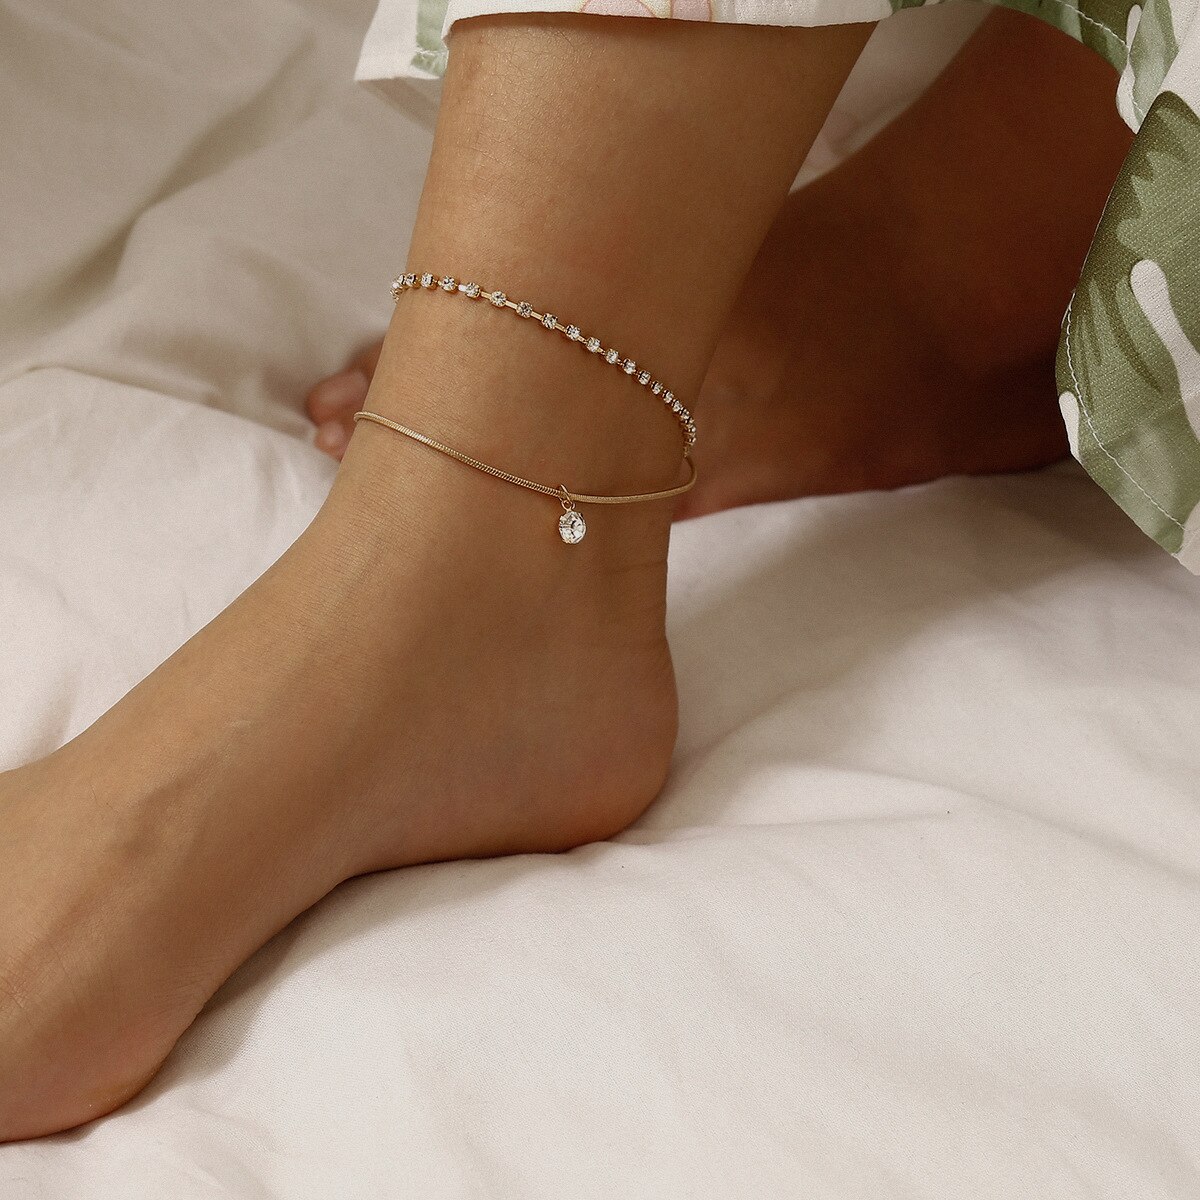 Chic Simple Double-Layer Gold Kleur Enkelbanden Ketting Mode Vrouwen Strand Foot Chain Been Armband Vrouwen Sieraden